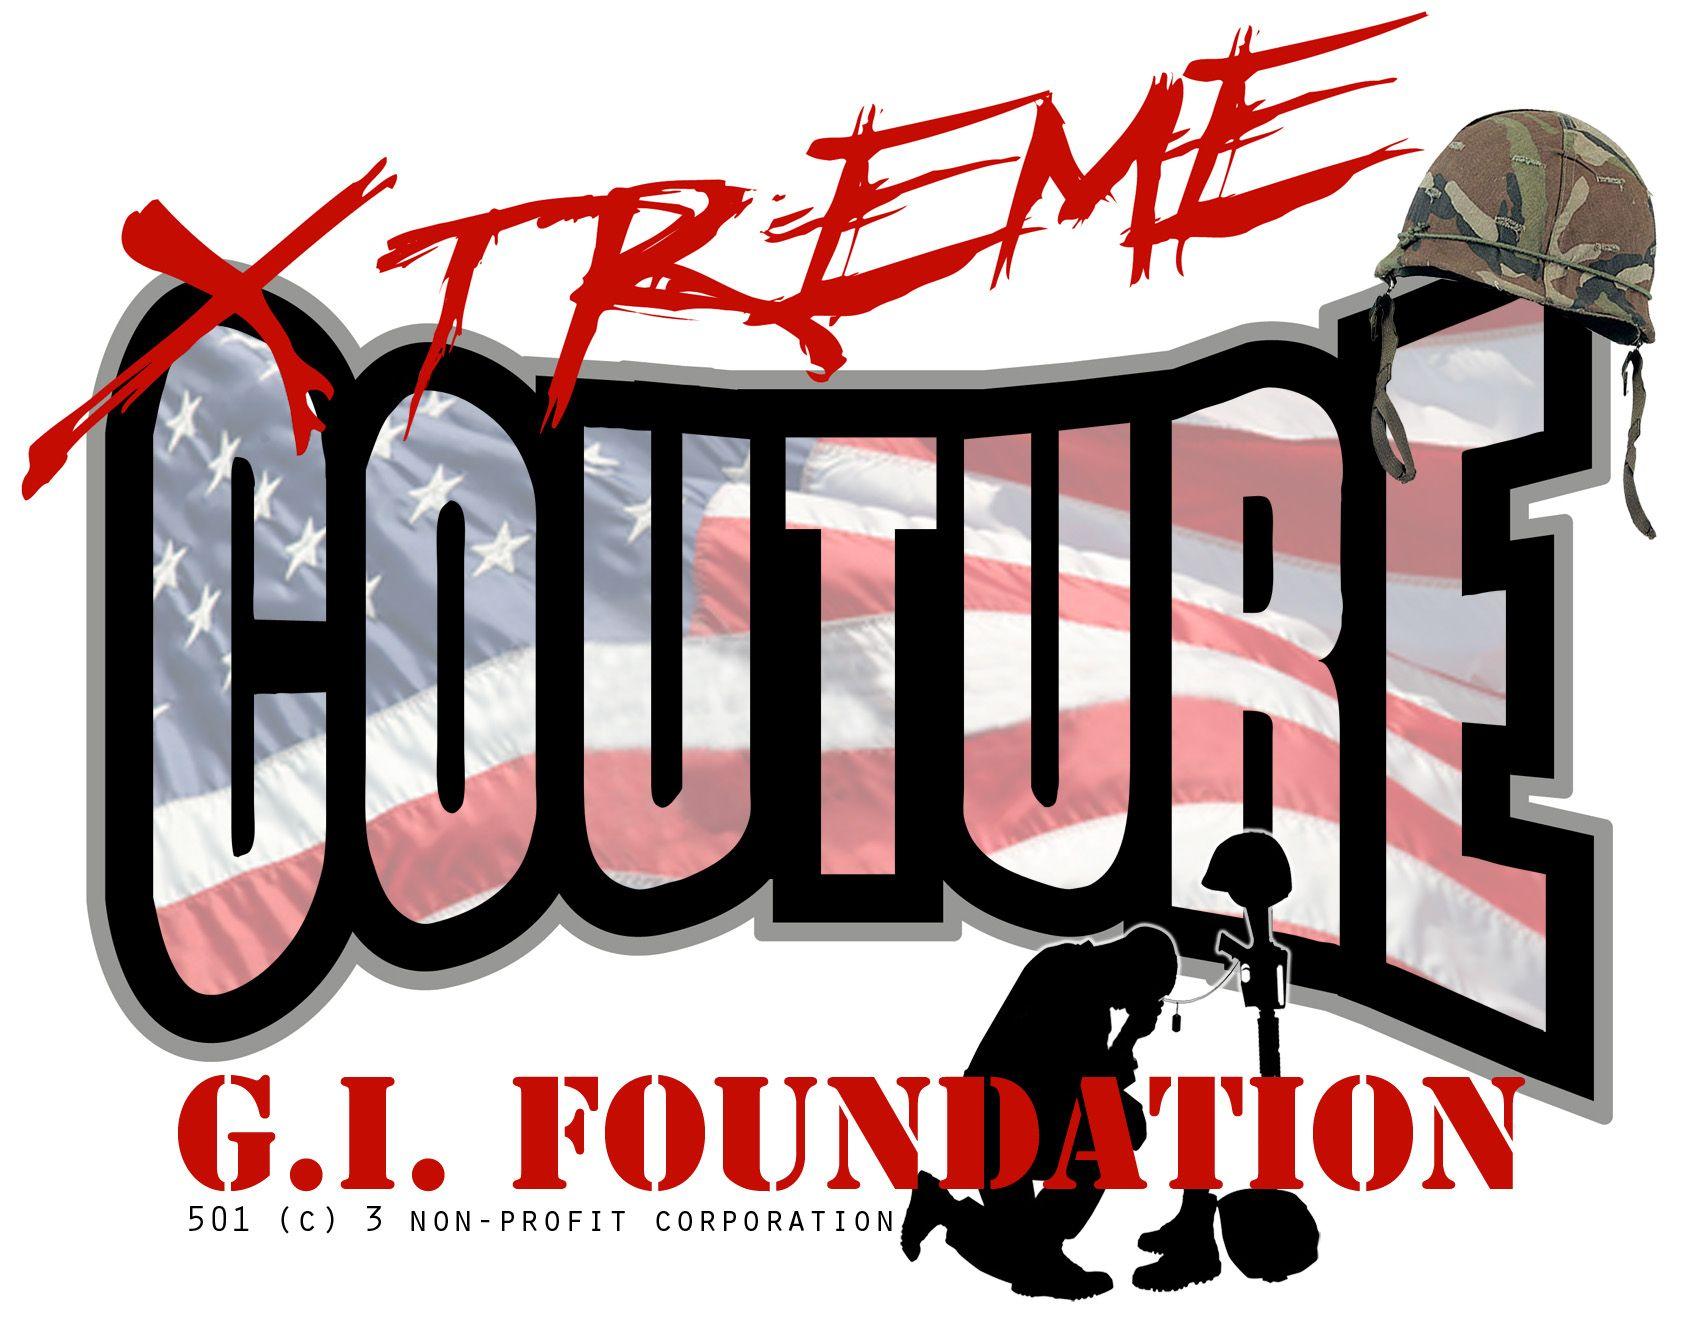 Xtreme Couture Logo - Xtreme Couture G.I. Foundation | 501 (c) 3 Non-Profit Corporation